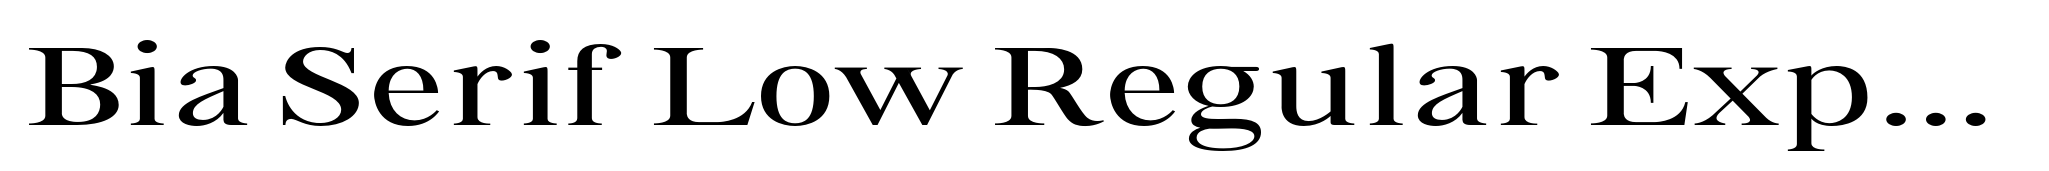 Bia Serif Low Regular Expanded image